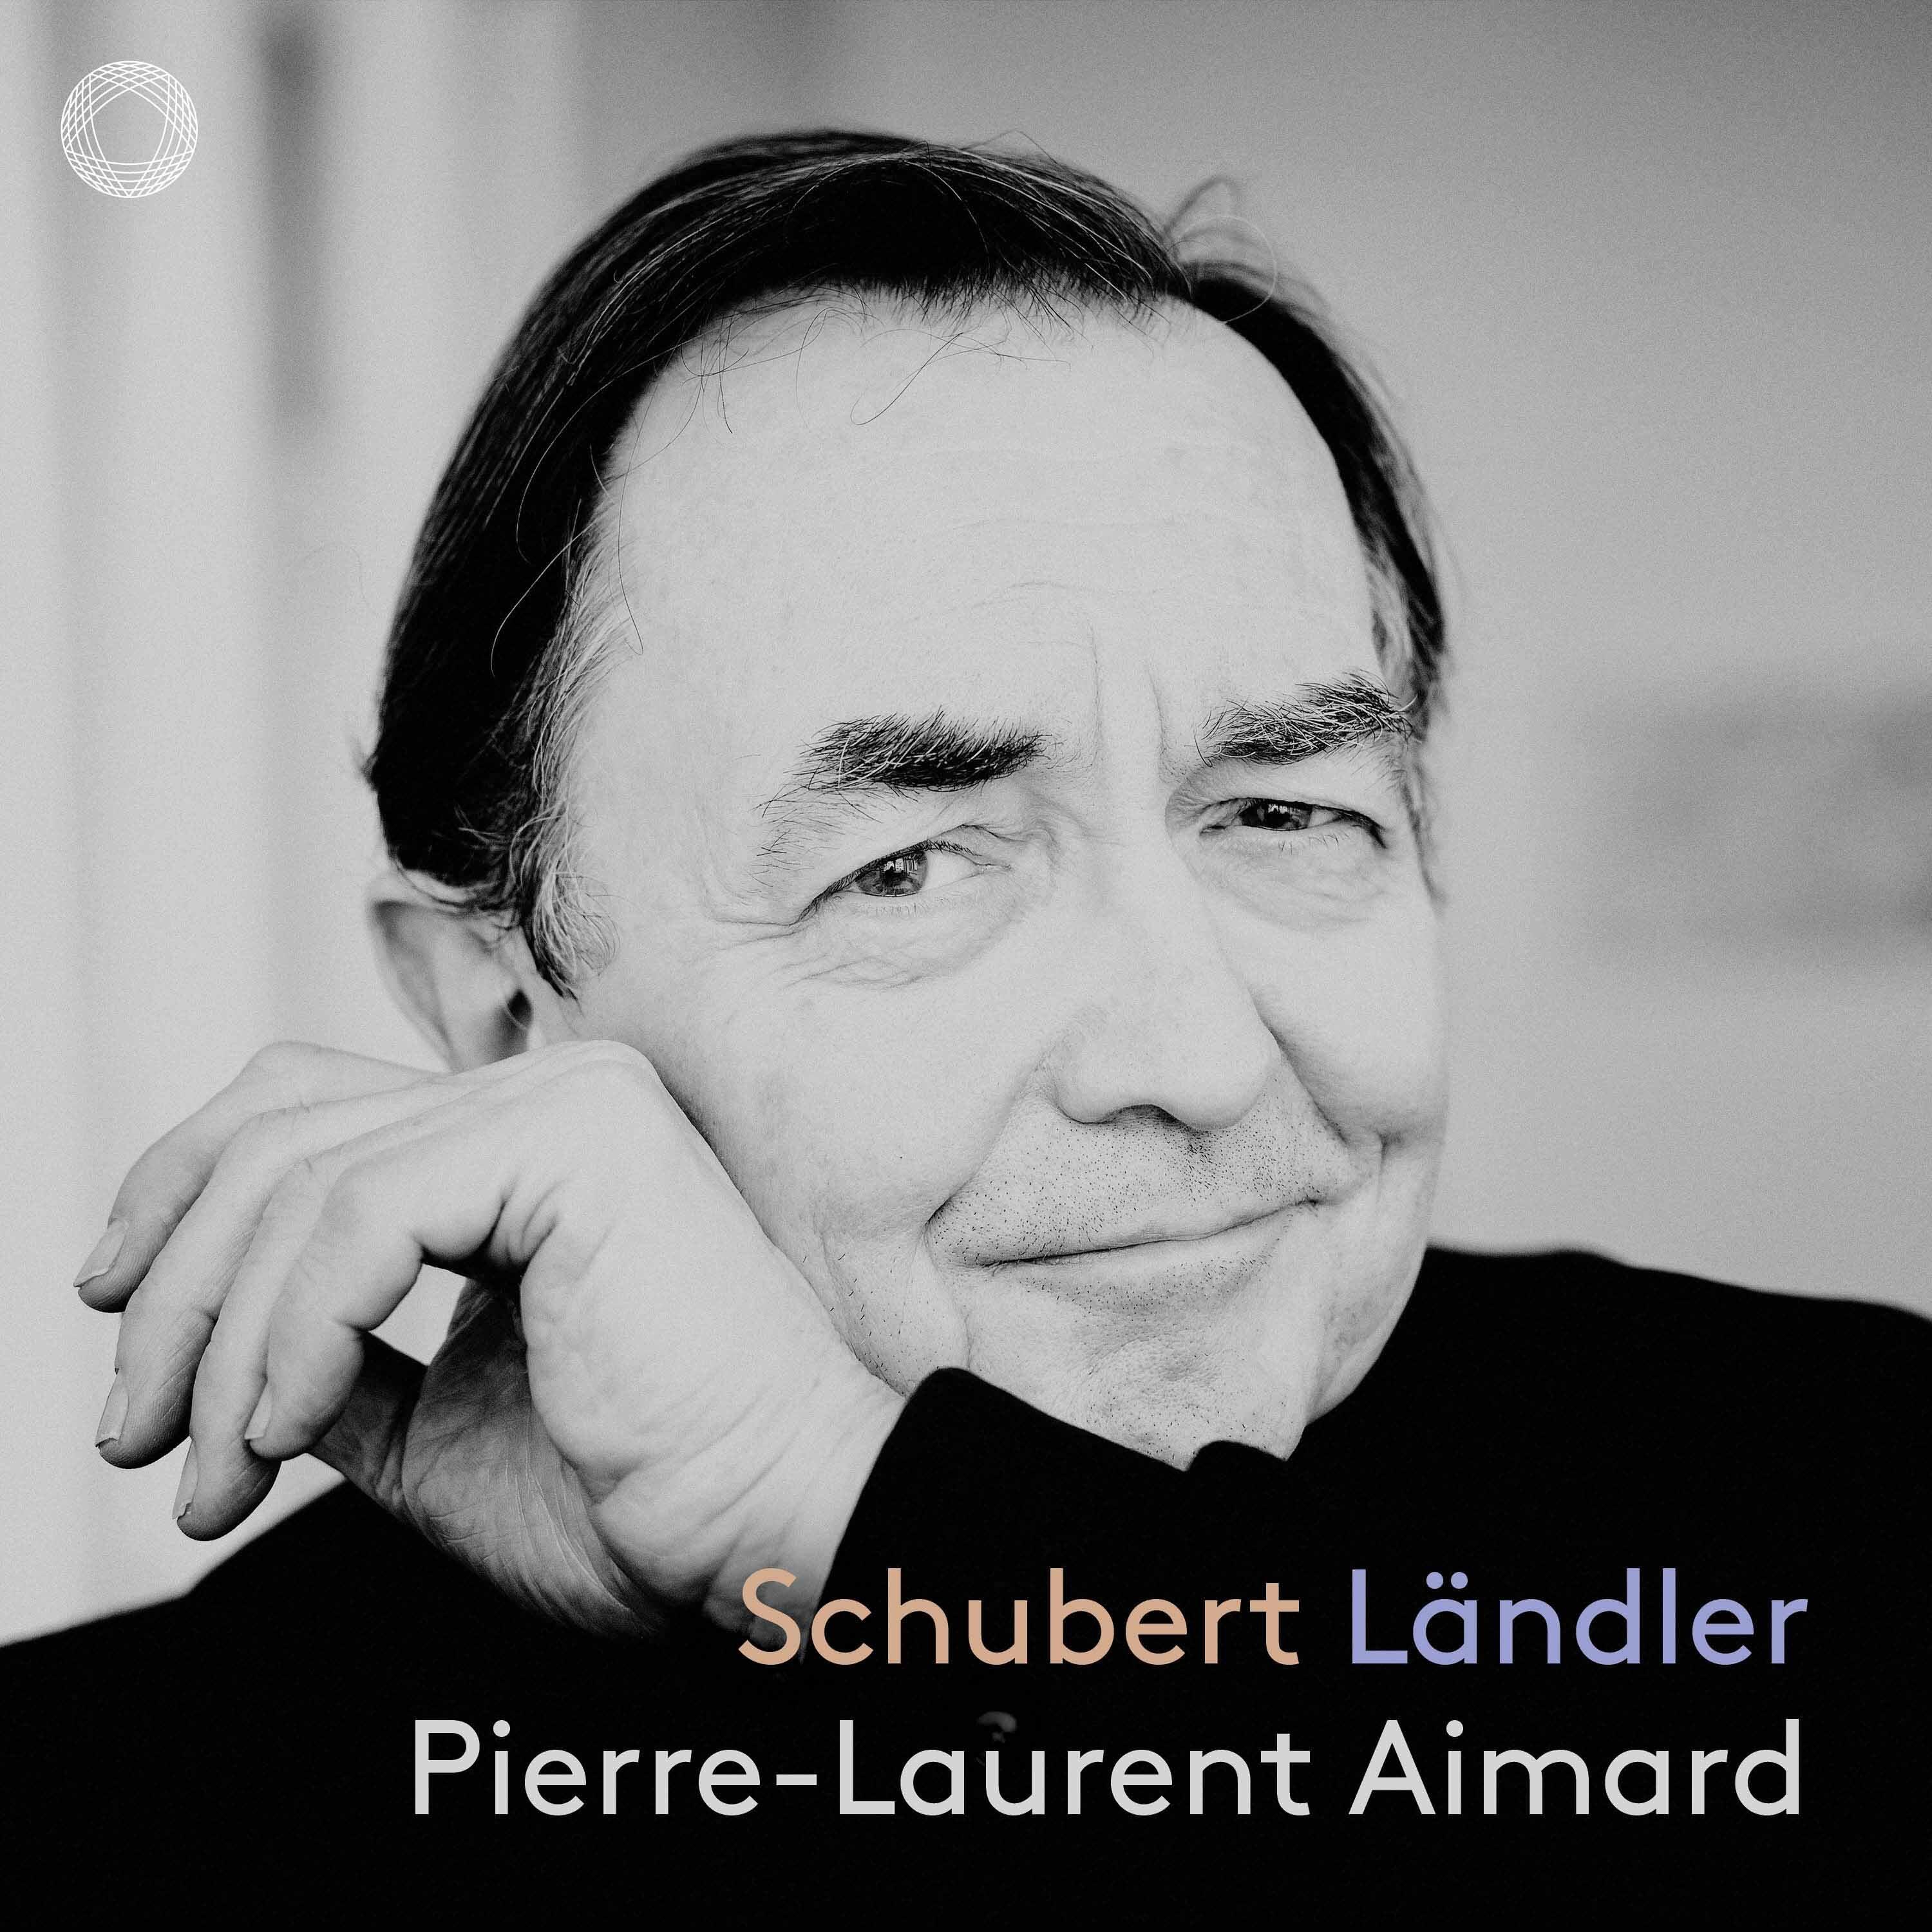 Pierre-Laurent Aimard - 38 Waltzes, Ländler and Ecossaises, Op. 18, D.145, Ländler: No. 2 in E-Flat Major - No. 3 in A-Flat Major